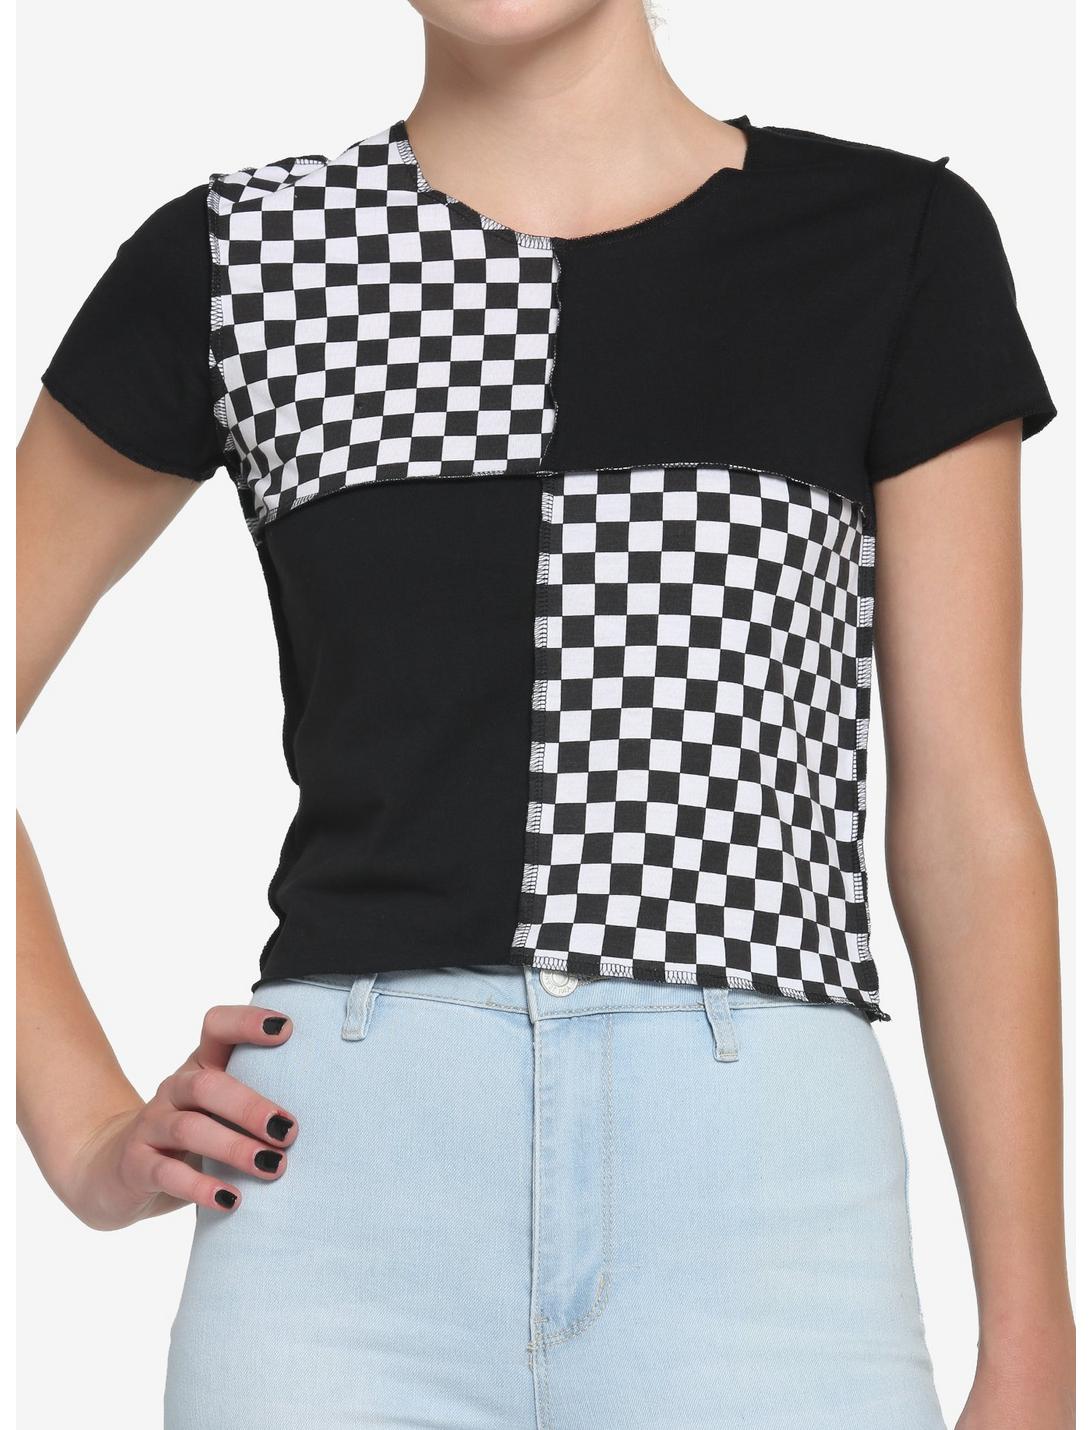 Black & White Checkered Color-Block Girls Baby T-Shirt, BLACK WHITE CHECKER, hi-res